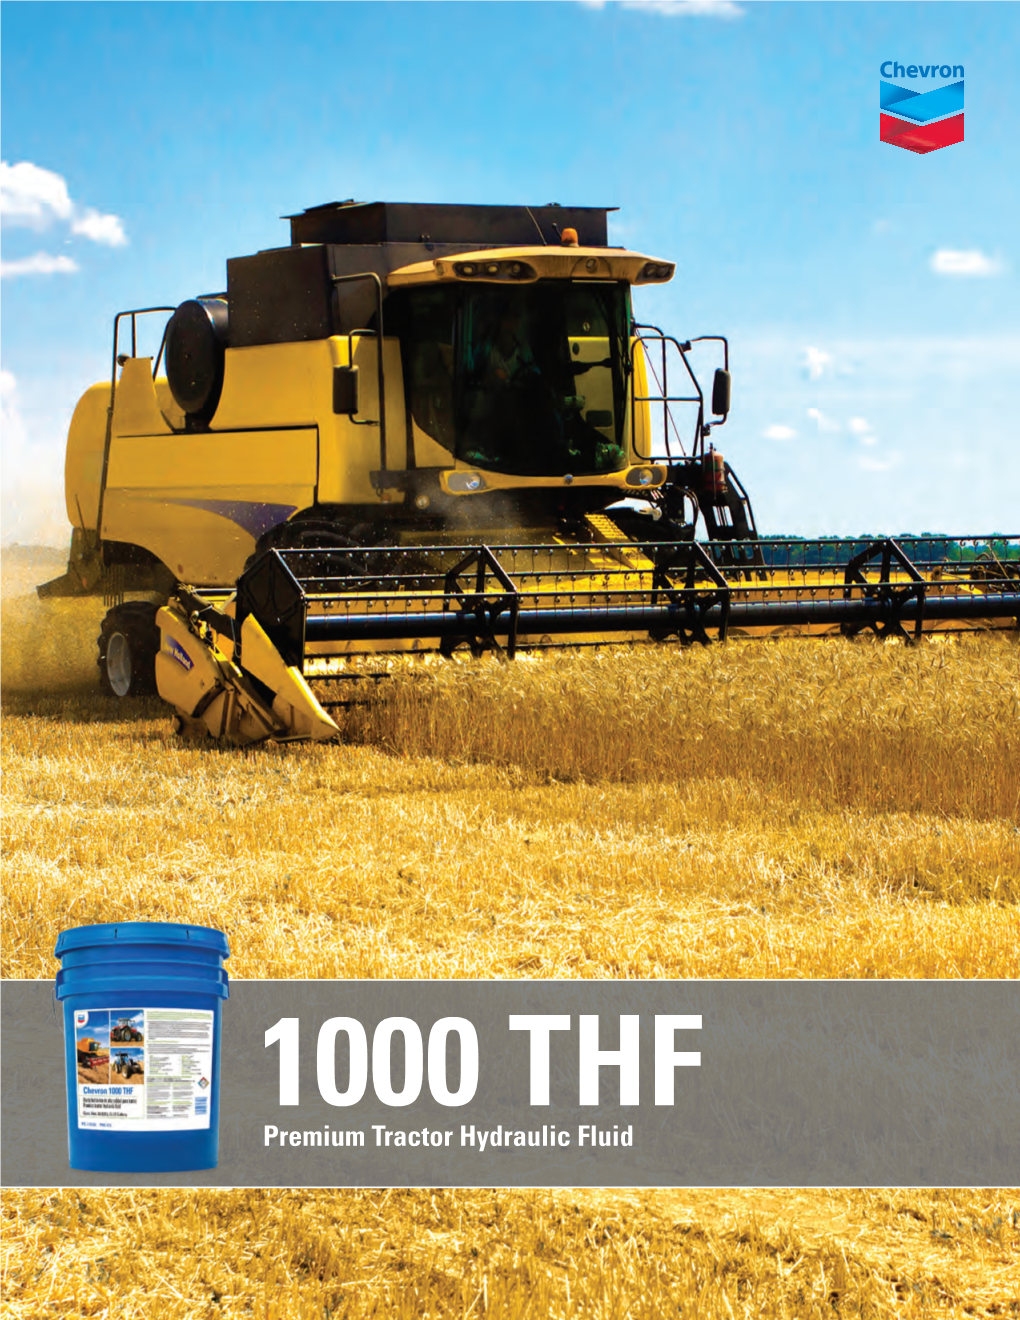 Premium Tractor Hydraulic Fluid Chevron 1000 THF Specifications